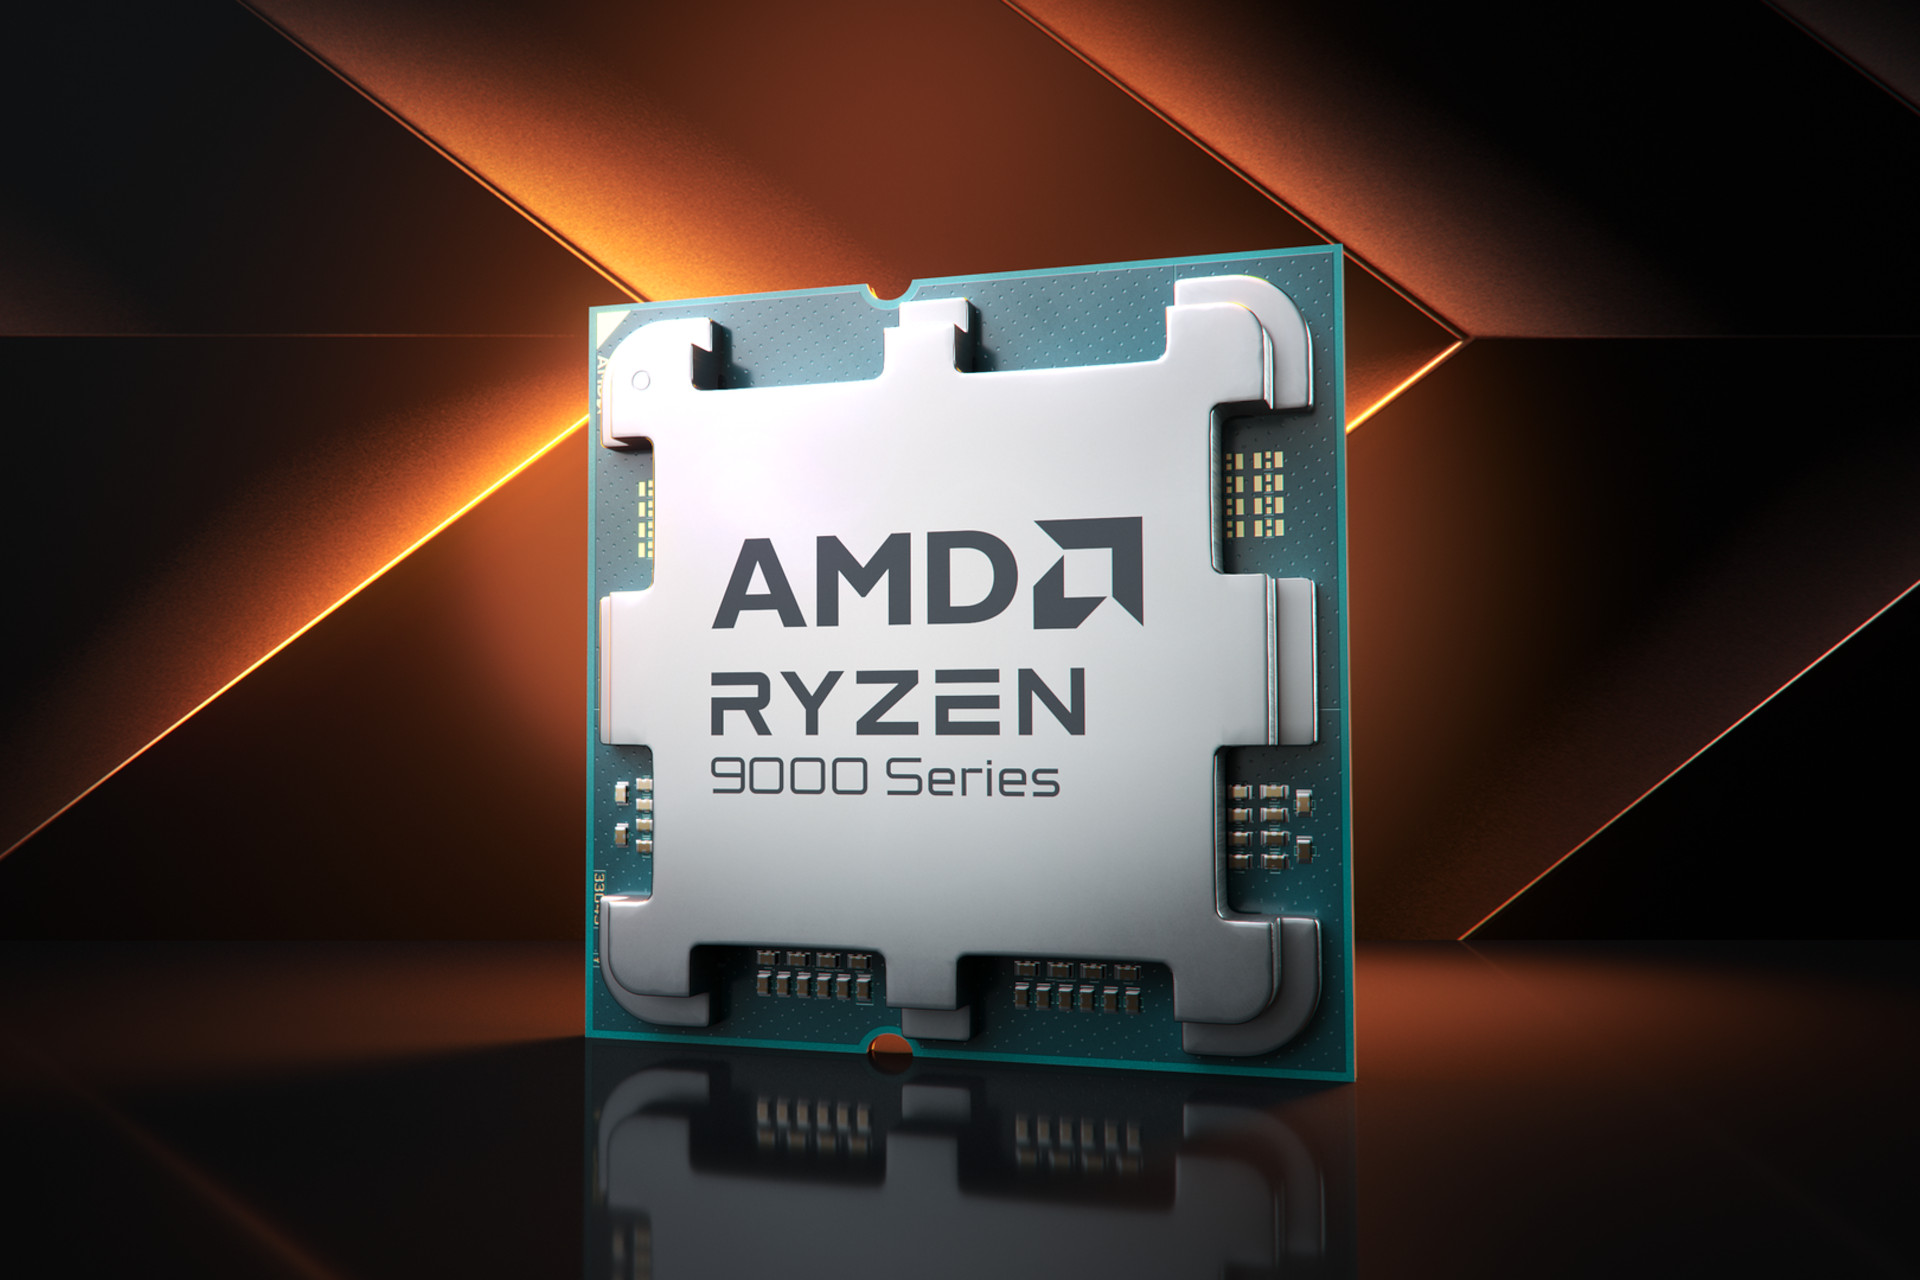 procesor AMD Ryzen 9000